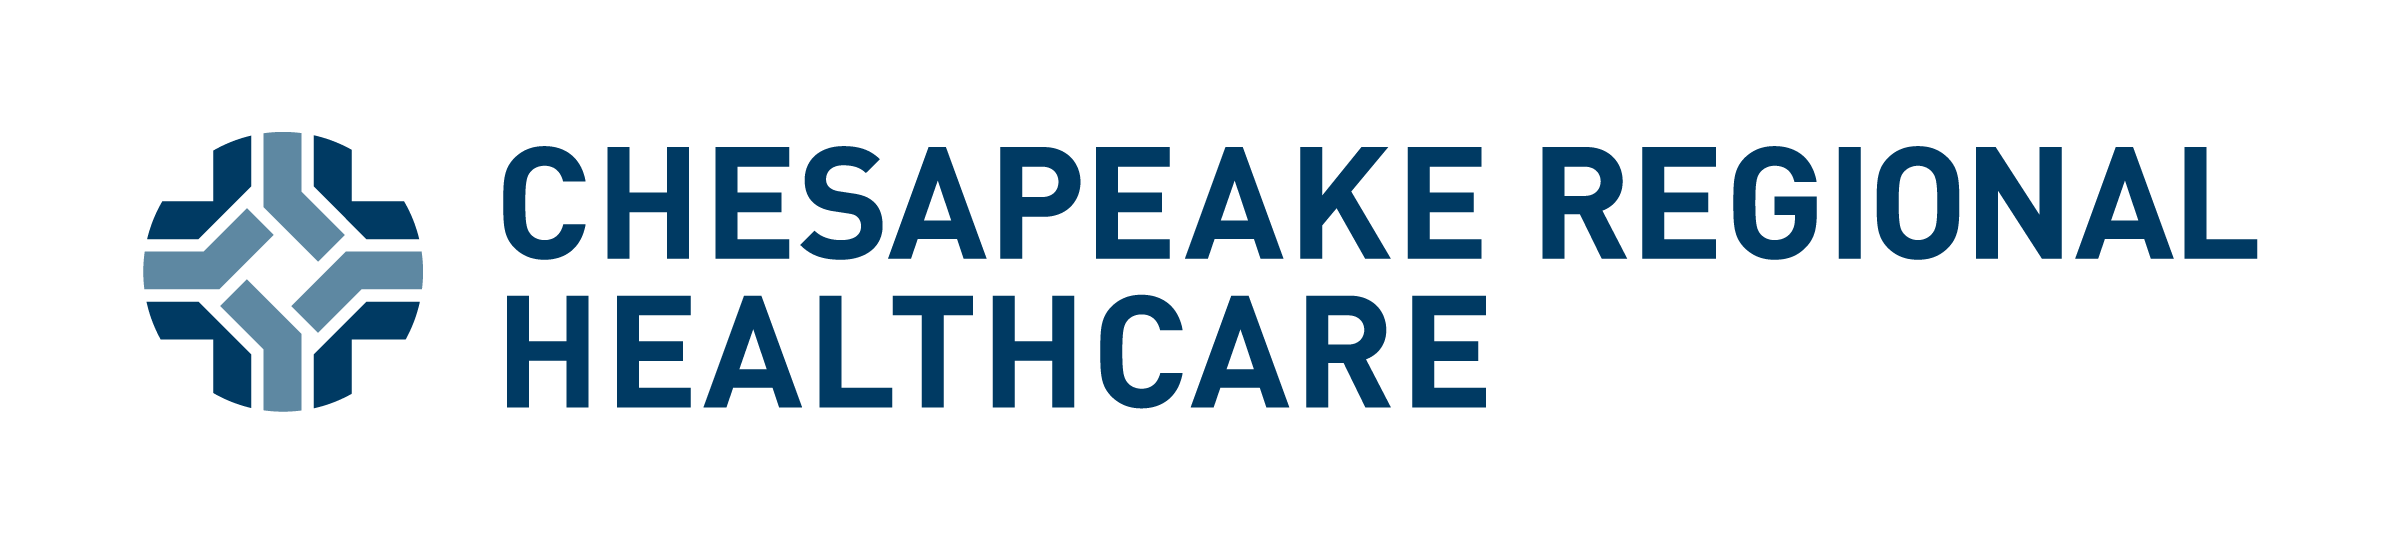 chesapeake-regional-healthcare-logo